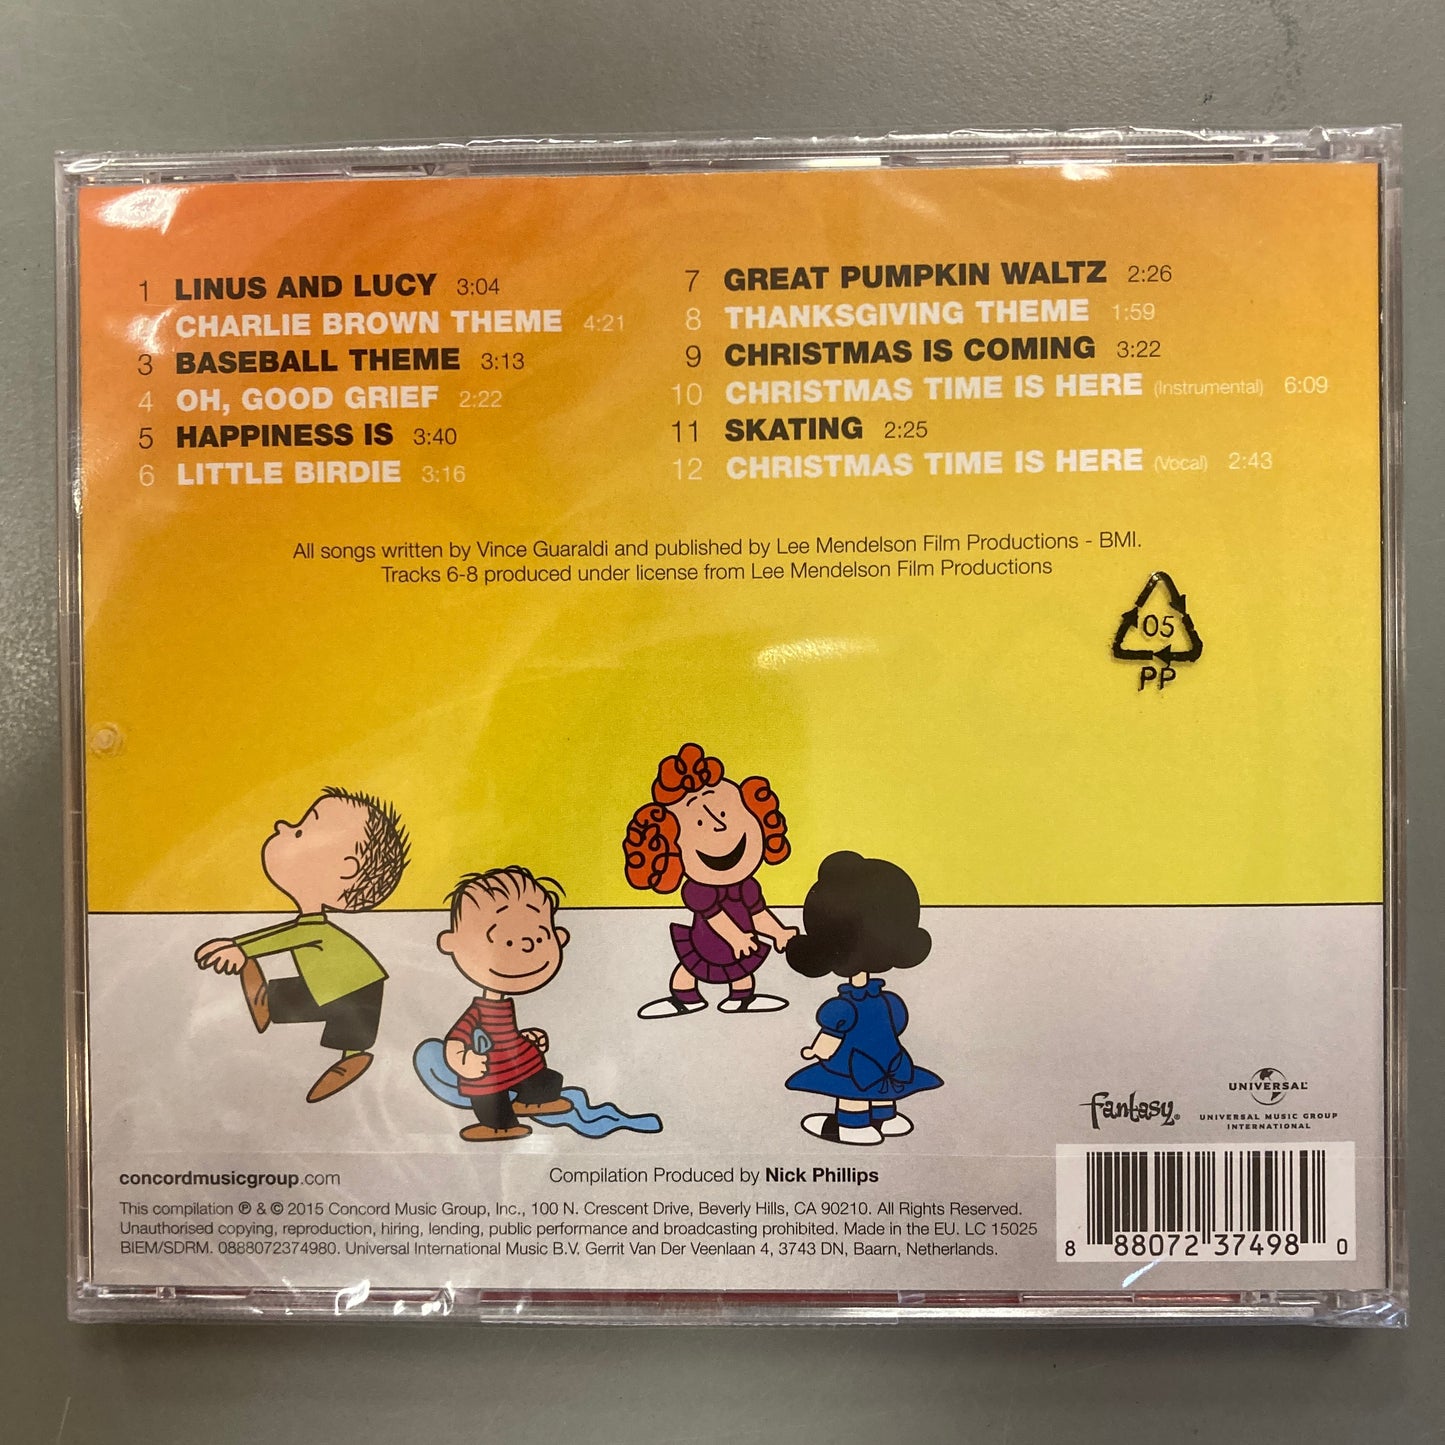 Peanuts Greatest Hits (Audio CD)